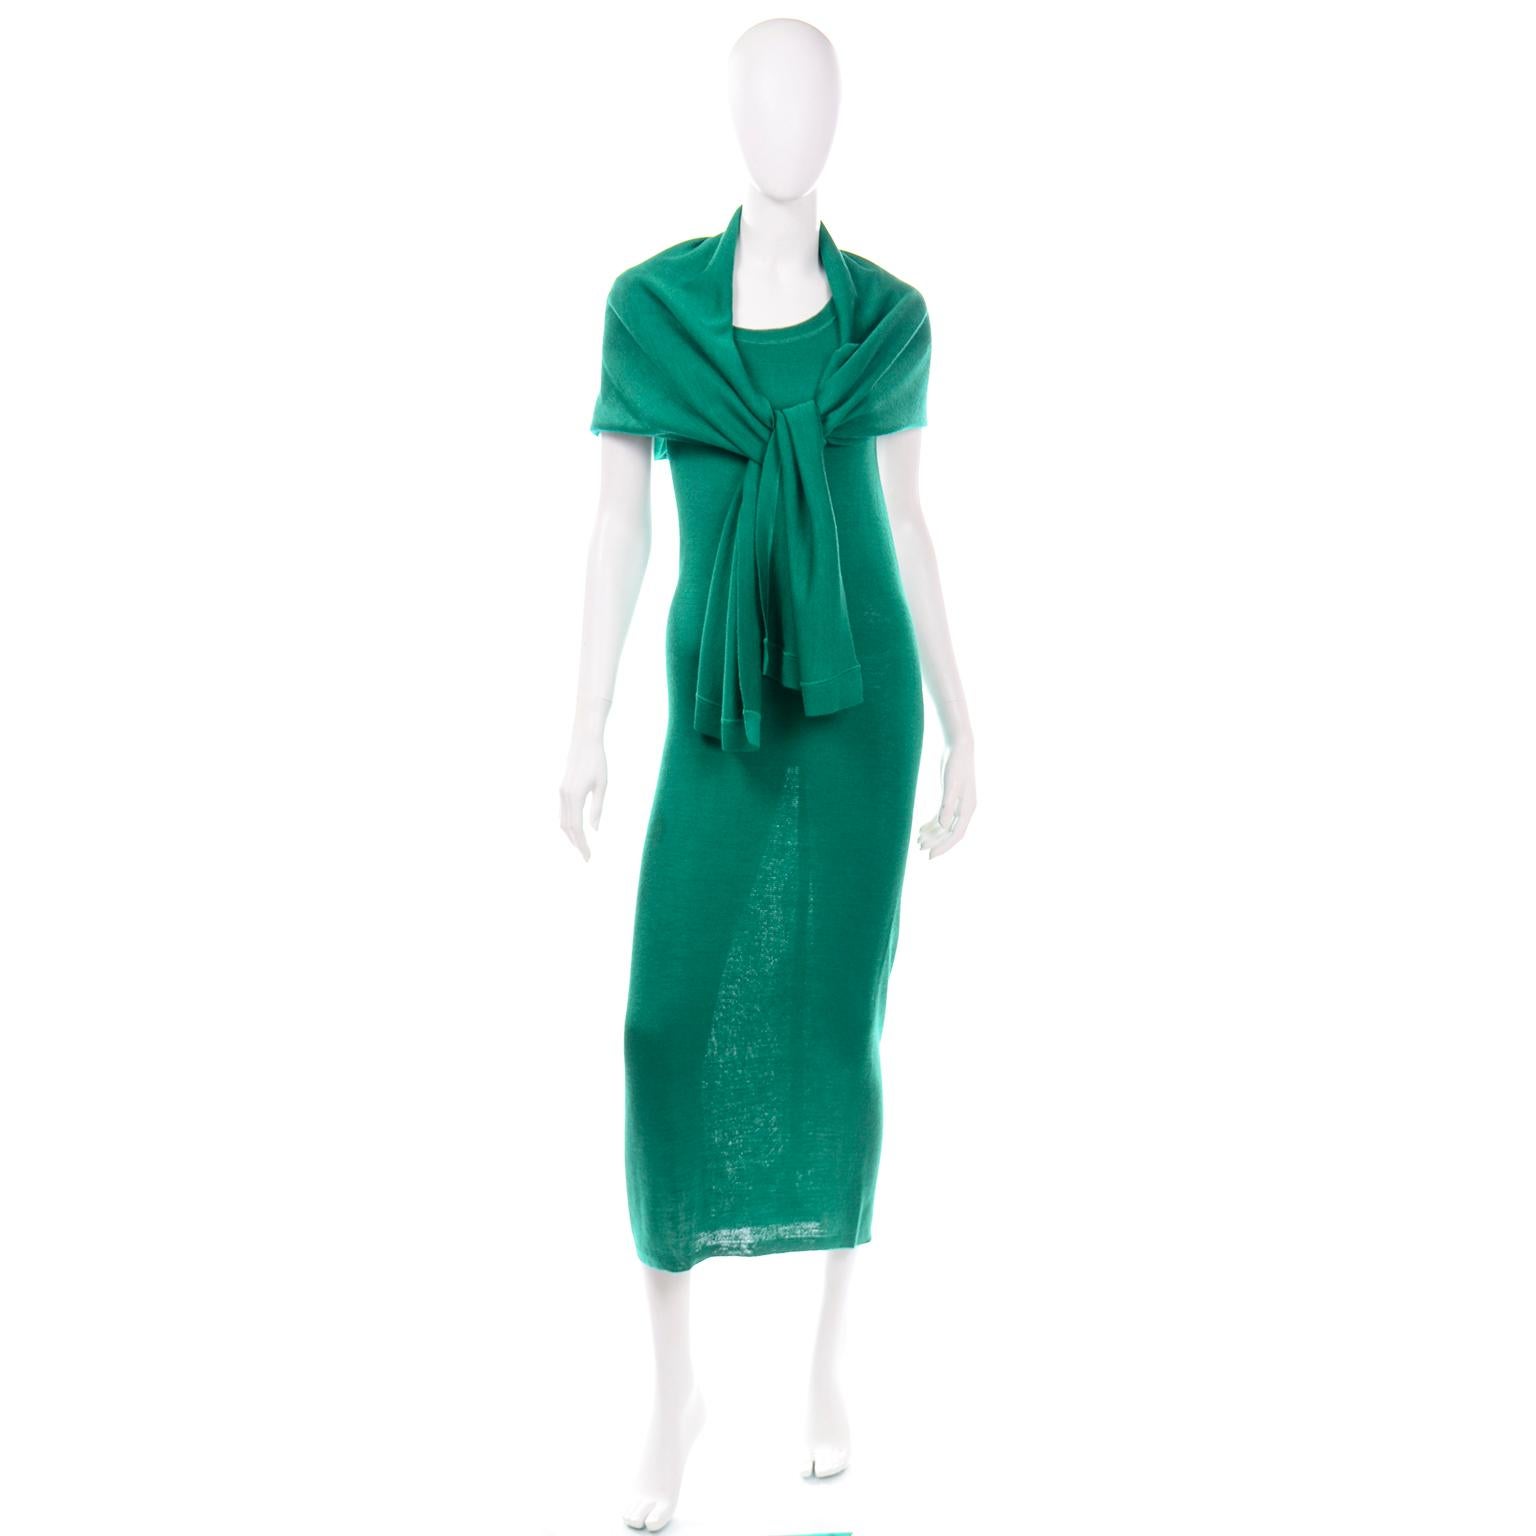 Vert Angelo Tarlazzi Paris - Robe en maille extensible vert émeraude avec drapé, vintage en vente